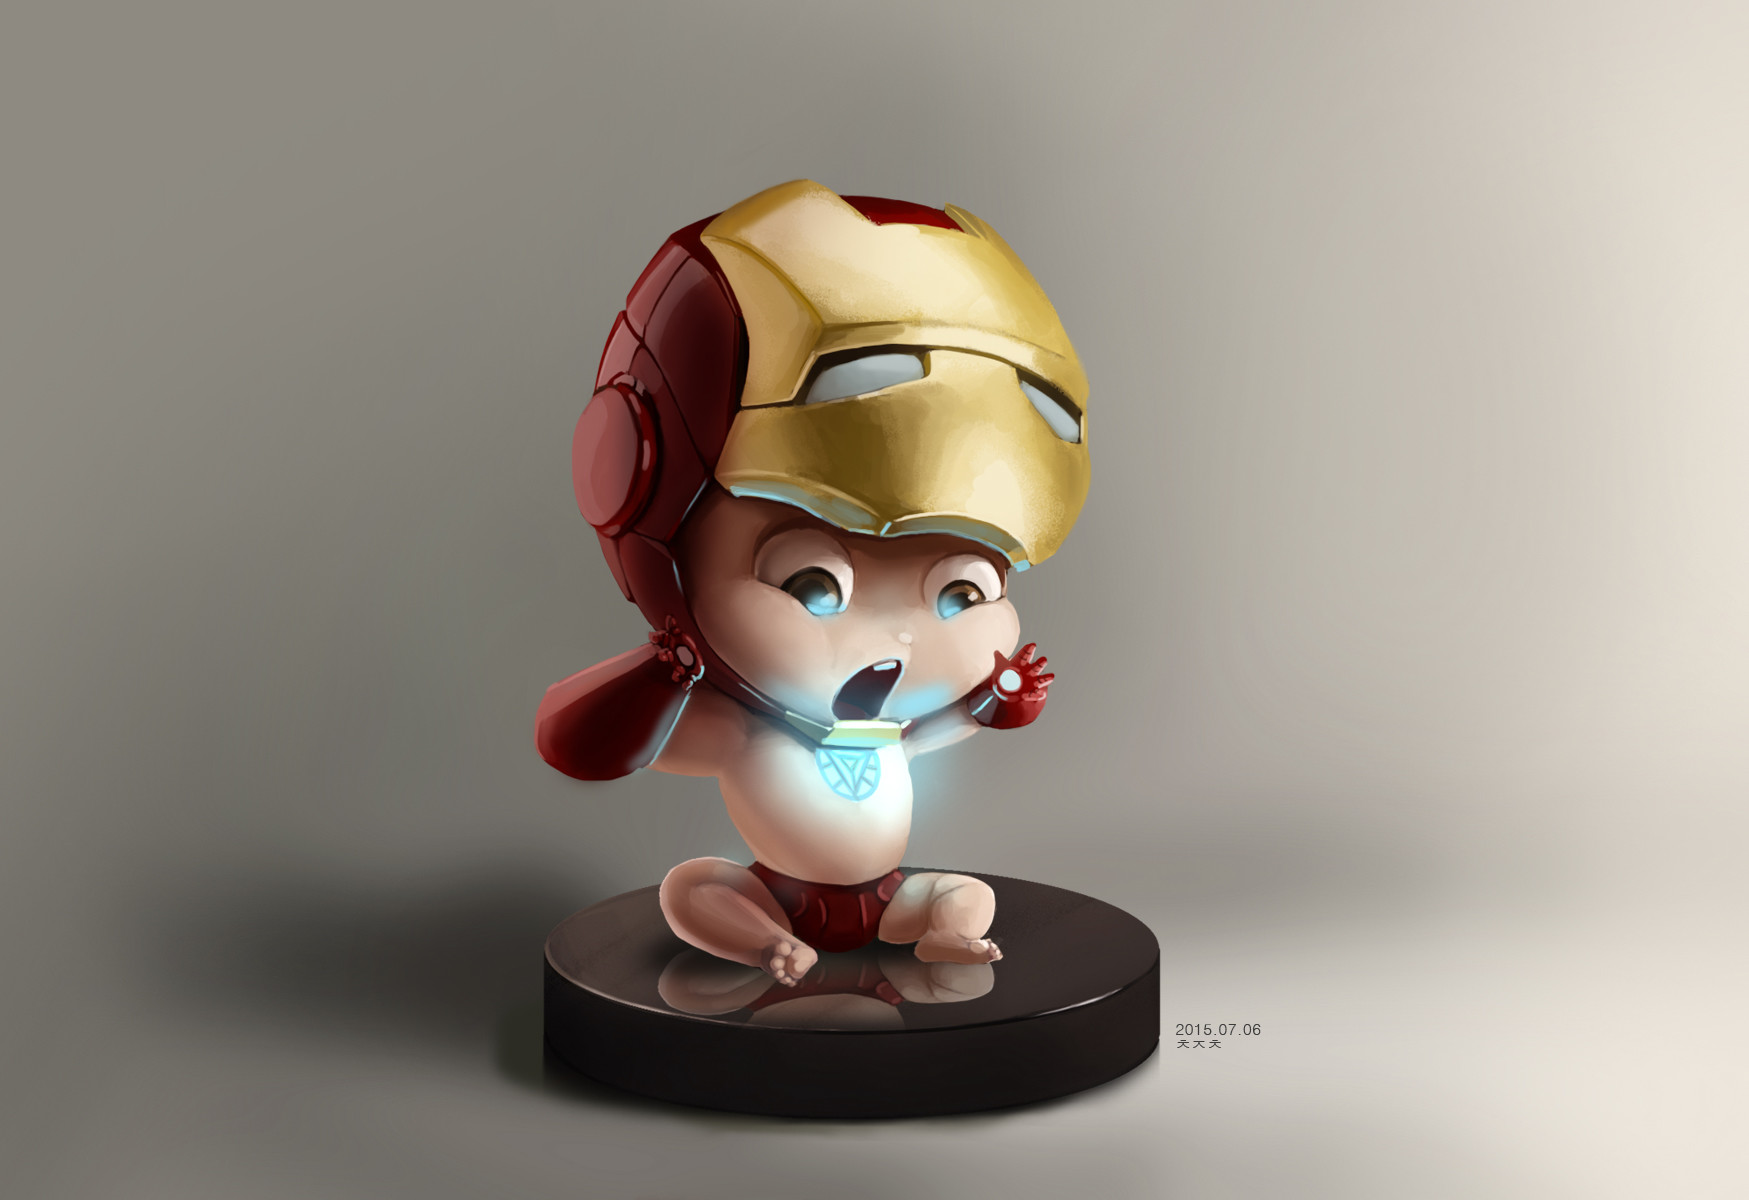 ji chang choi - Baby Iron Man